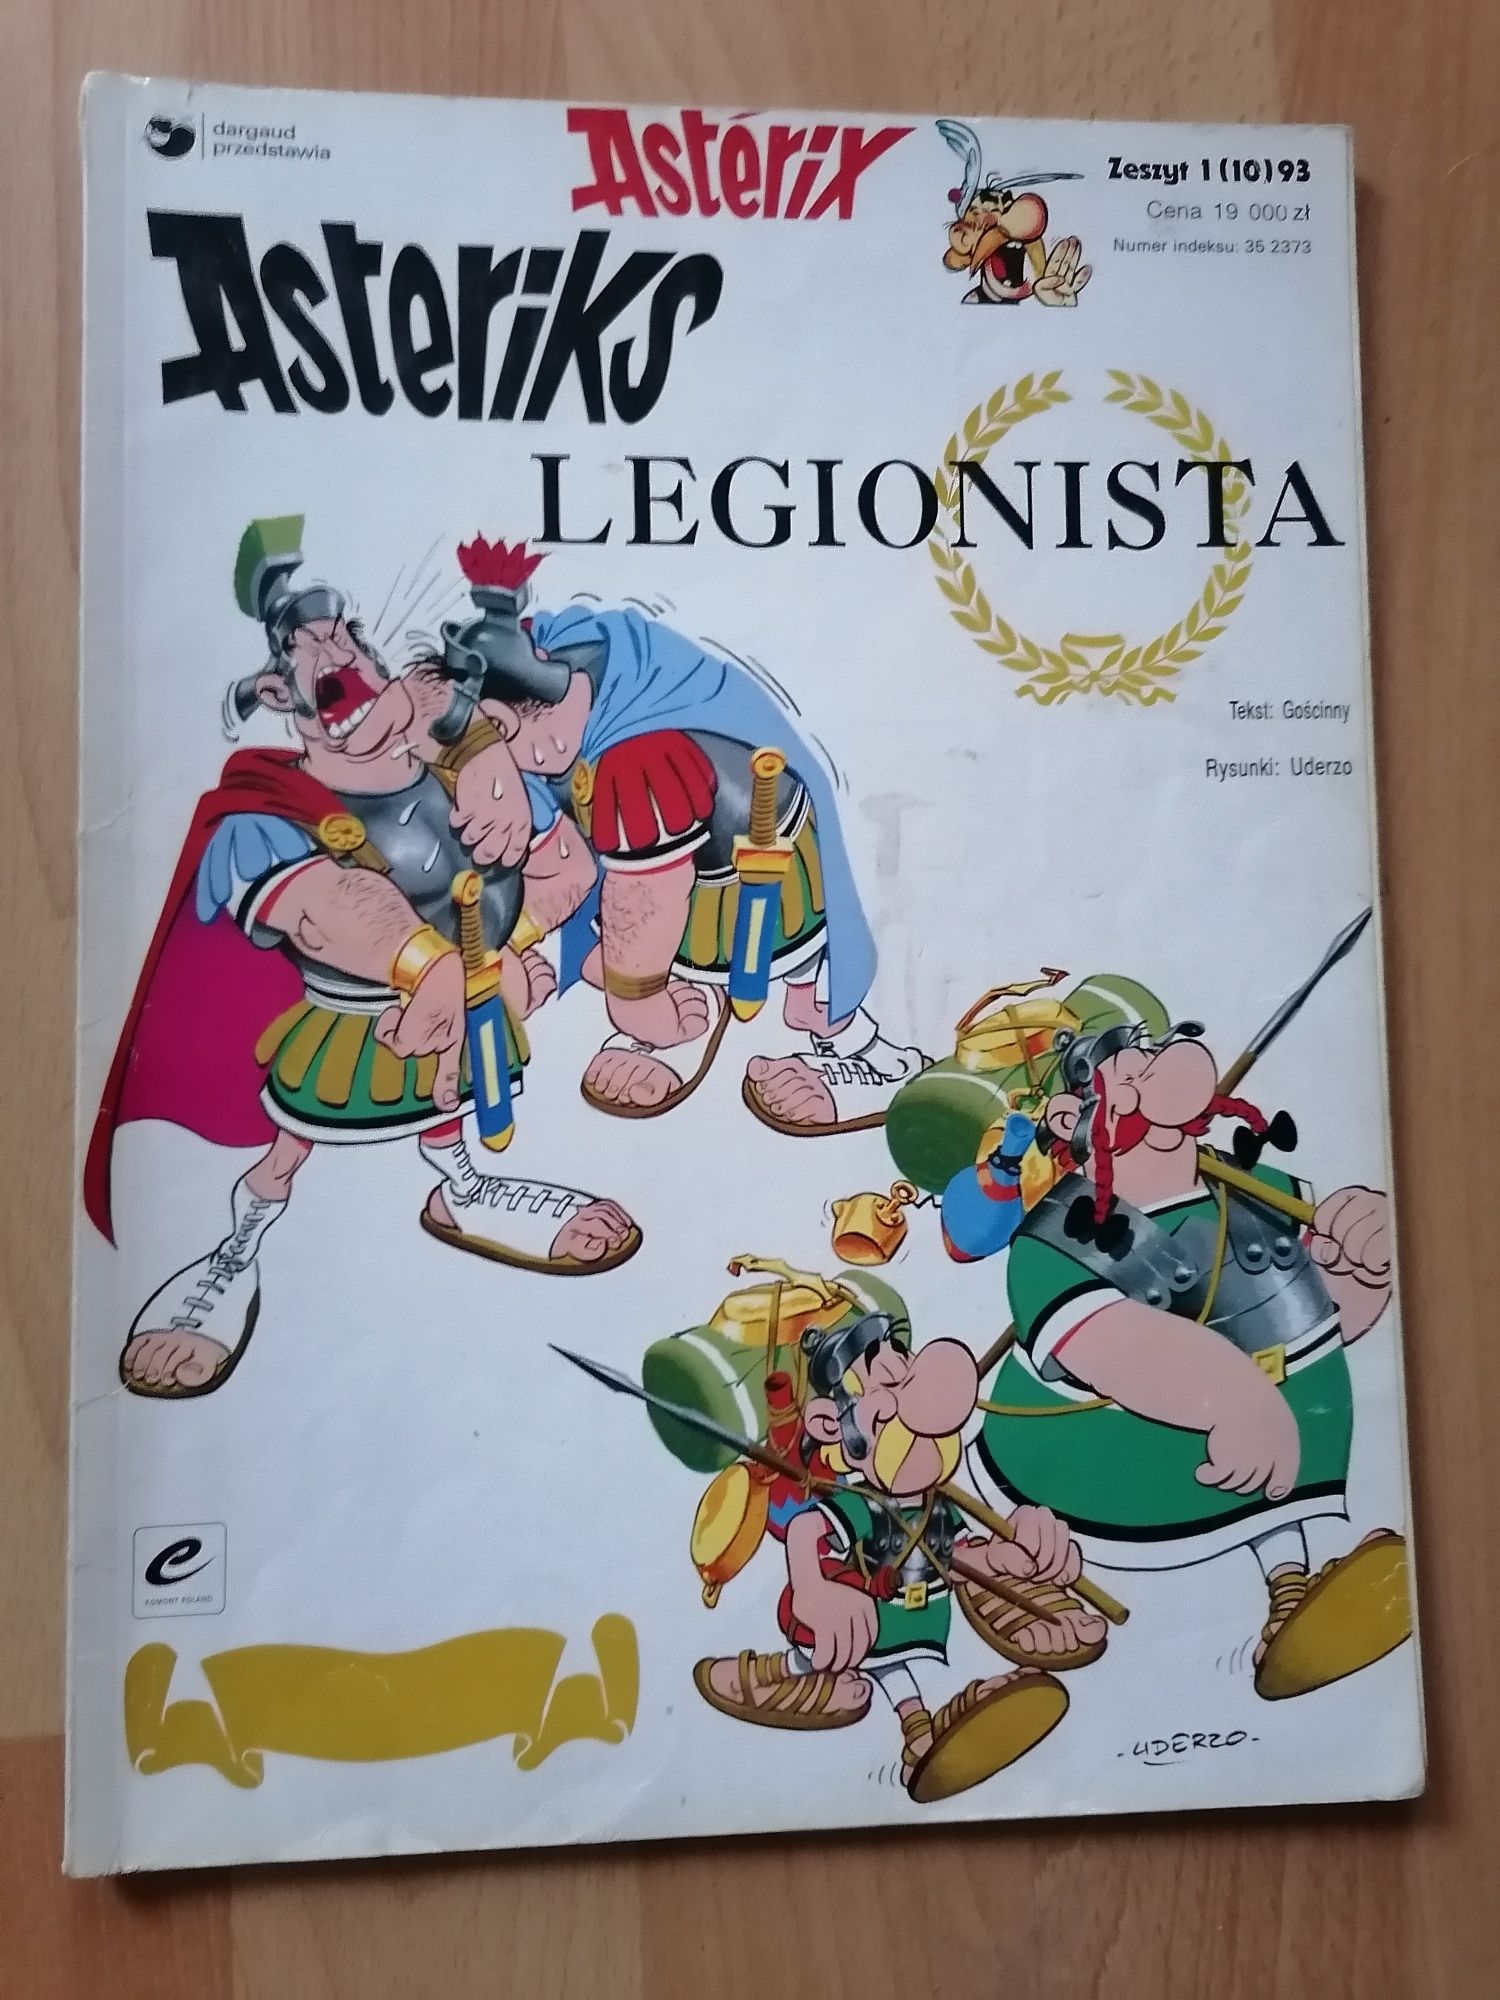 Asterix i legionista zeszyt 1 (10) 93